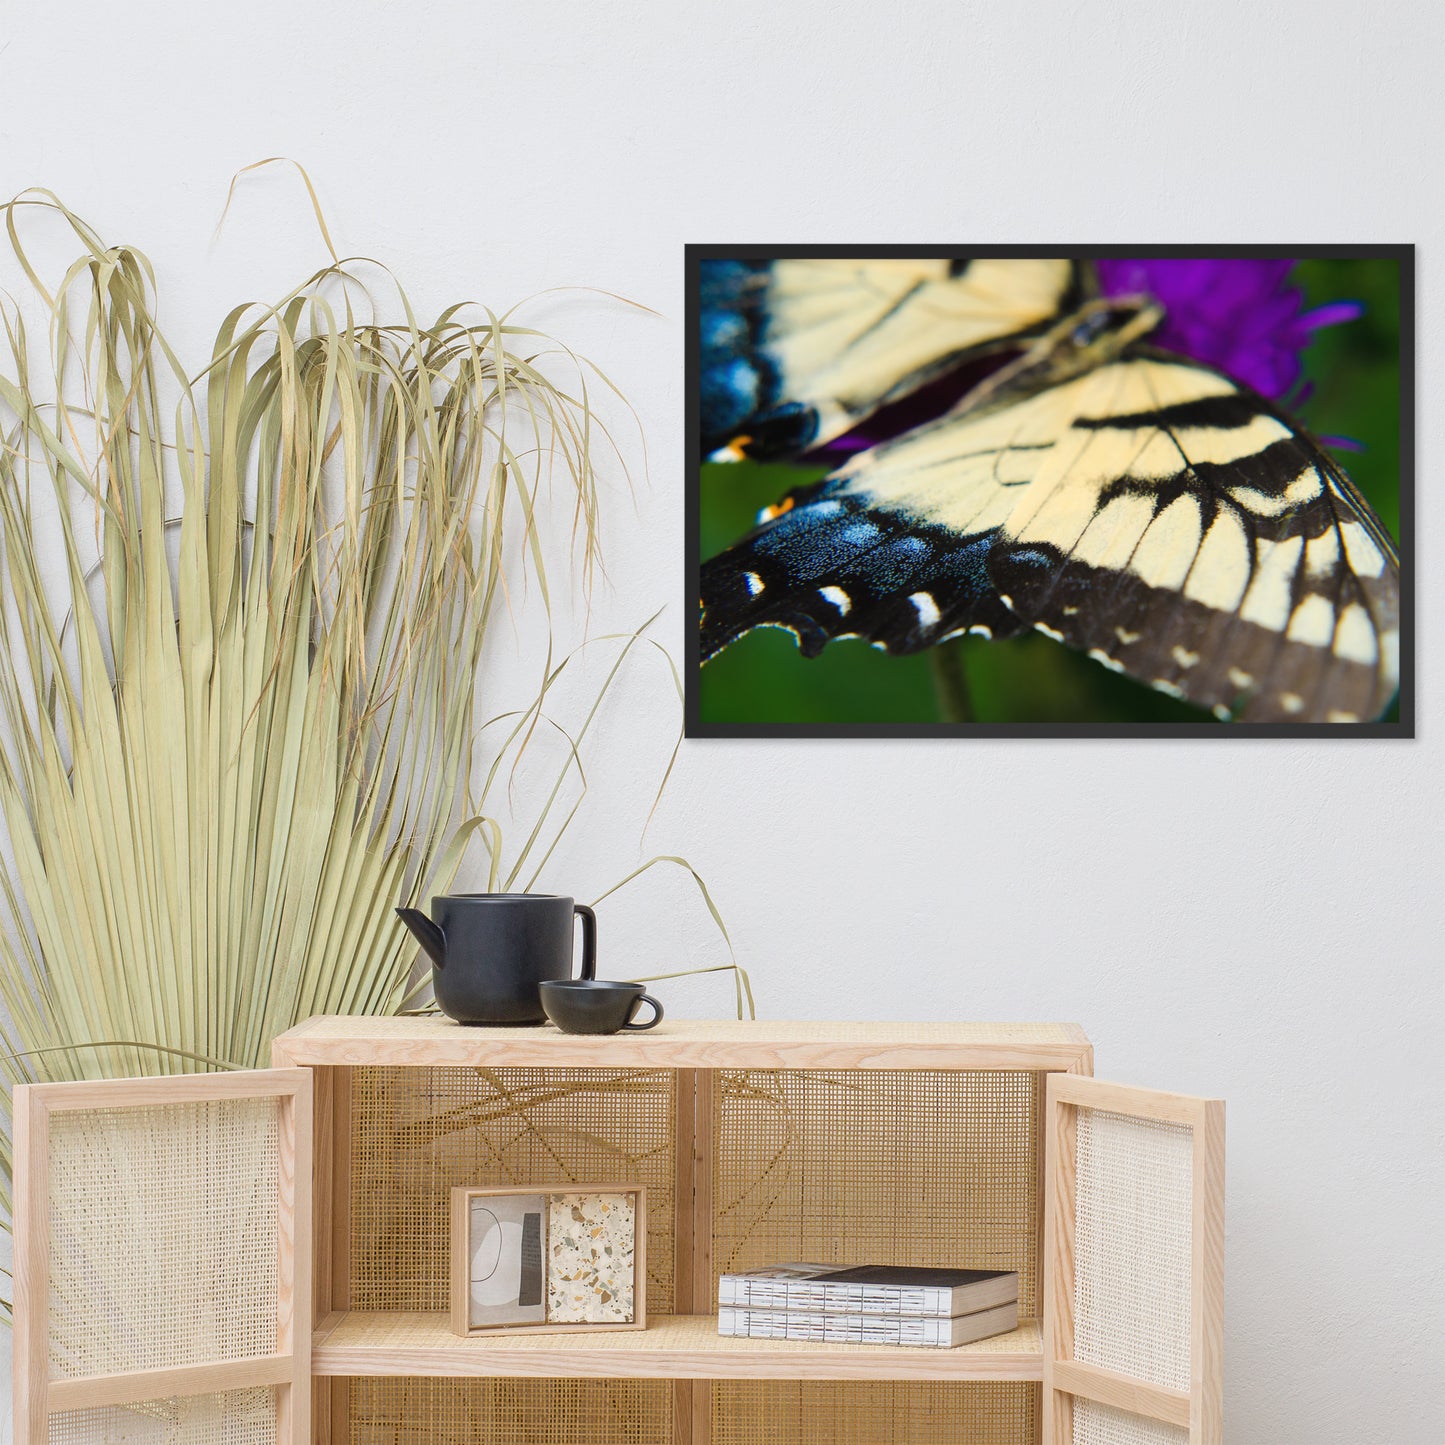 Butterfly Wings Wildlife Photo Framed Wall Art Prints